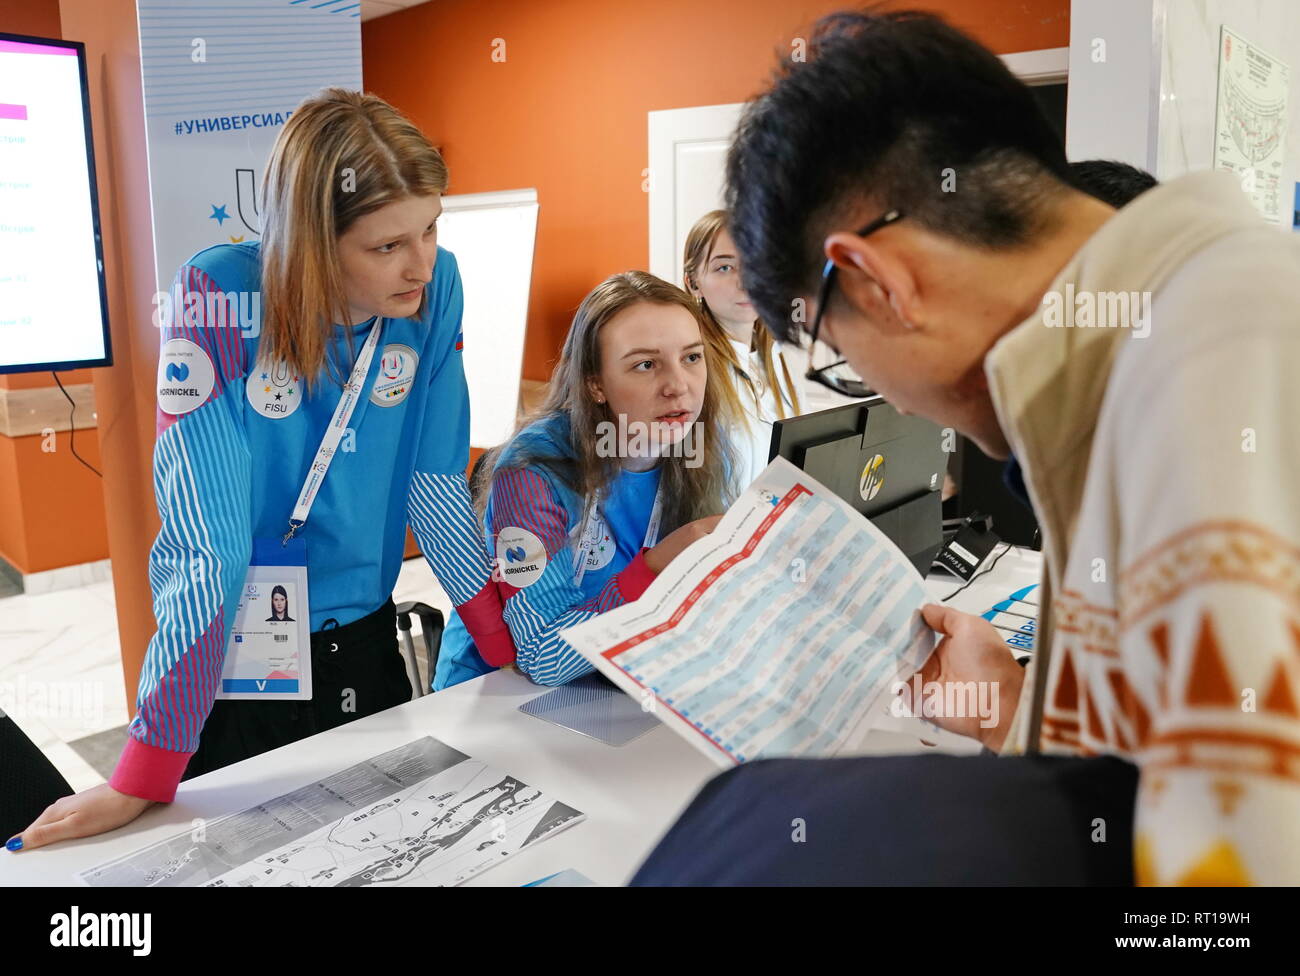 Krasnoyarsk. 27th Feb, 2019. Volunteers offer consultation for journalists in the main press center of the 29th Winter Universiade in Krasnoyarsk, Russia on Feb. 27, 2019. Credit: Yang Shiyao/Xinhua/Alamy Live News Stock Photo